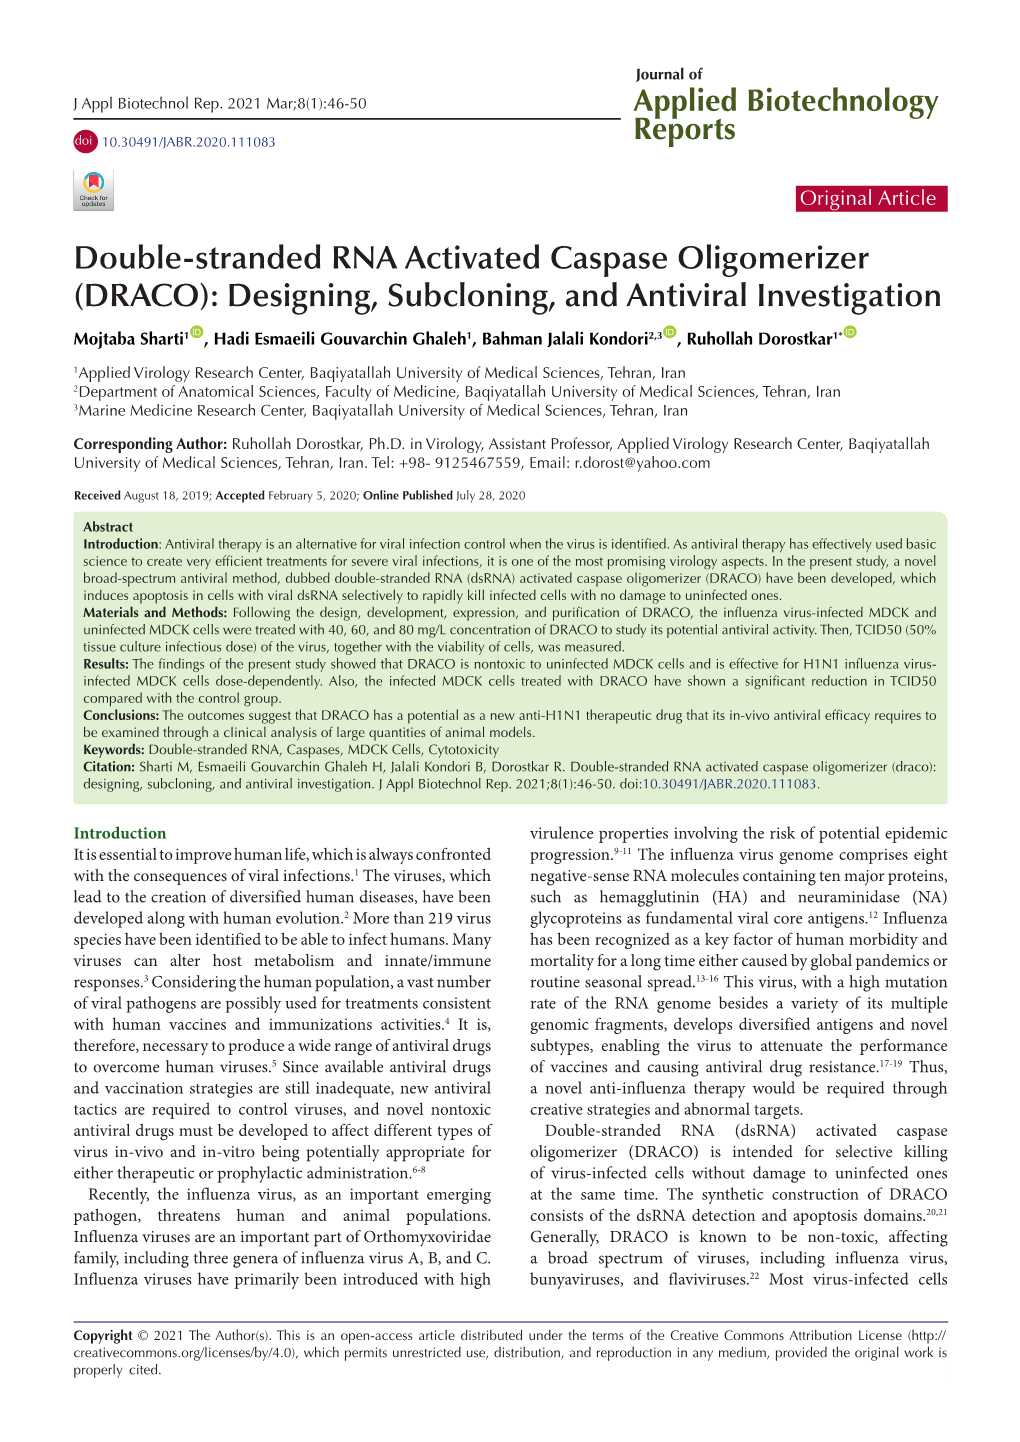 Double-Stranded RNA Activated Caspase Oligomerizer (DRACO): Designing, Subcloning, and Antiviral Investigation